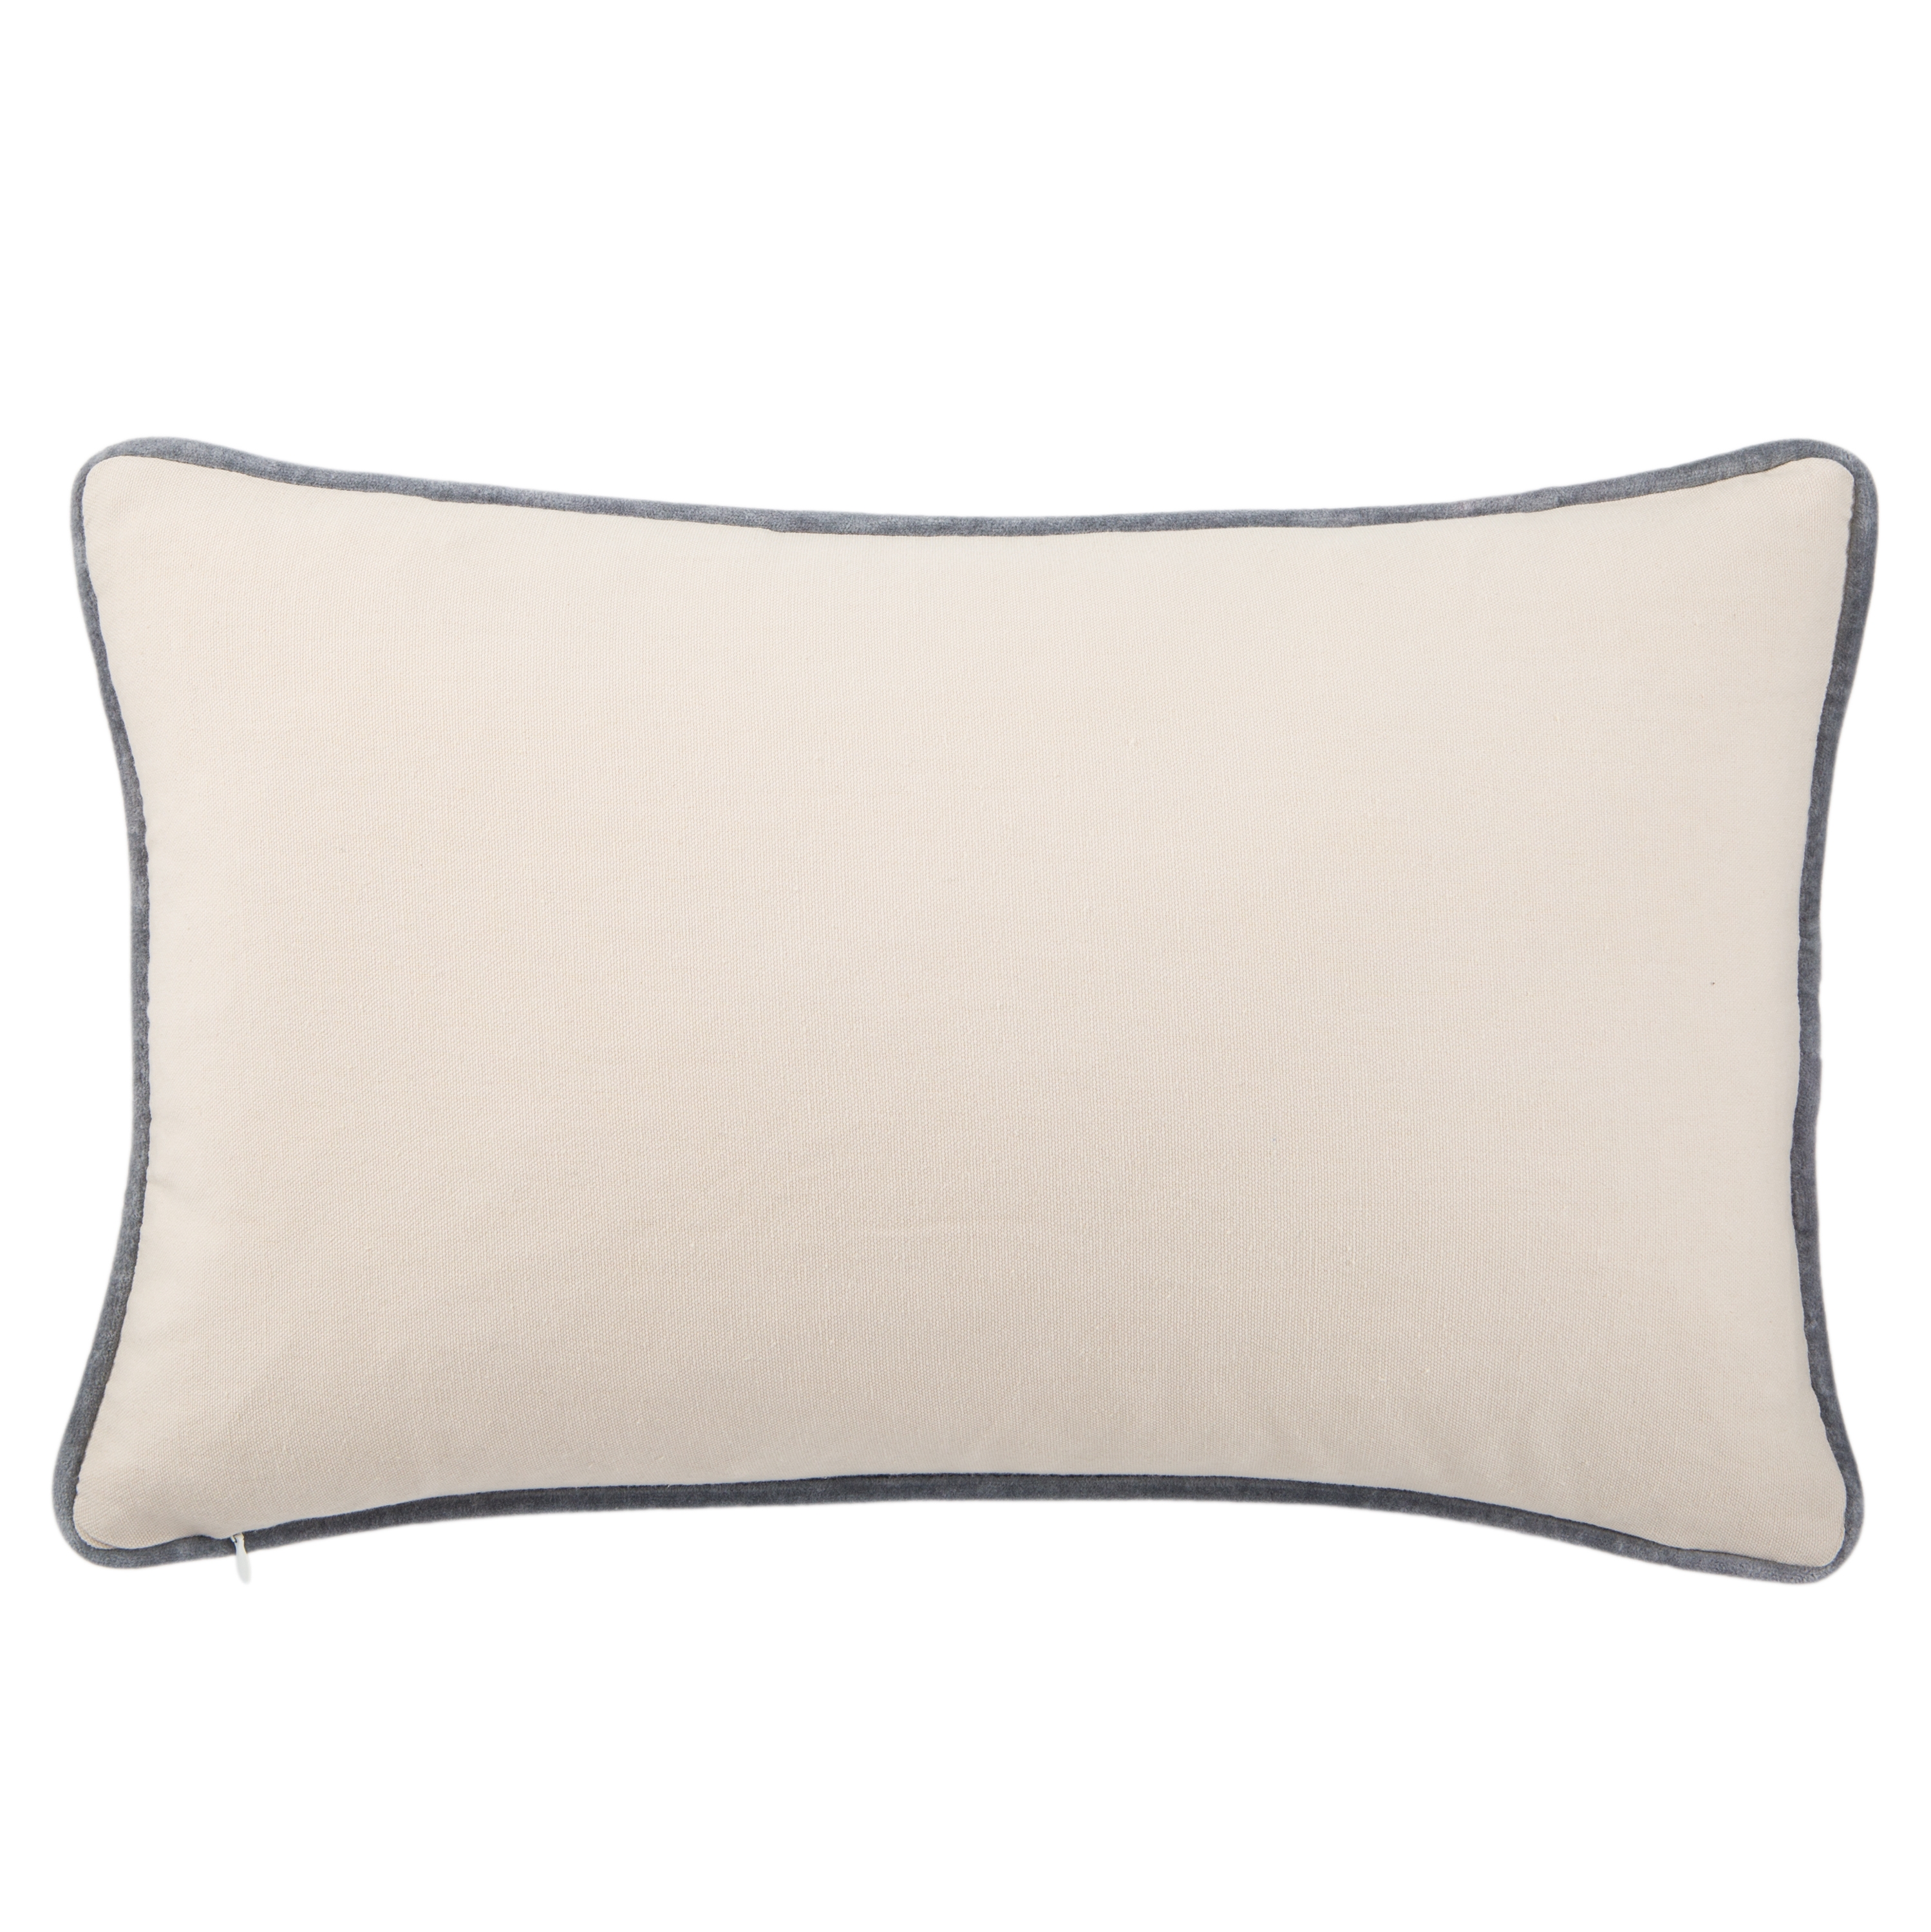 Design (US) Blush 13"X21" Pillow Indoor - Image 1